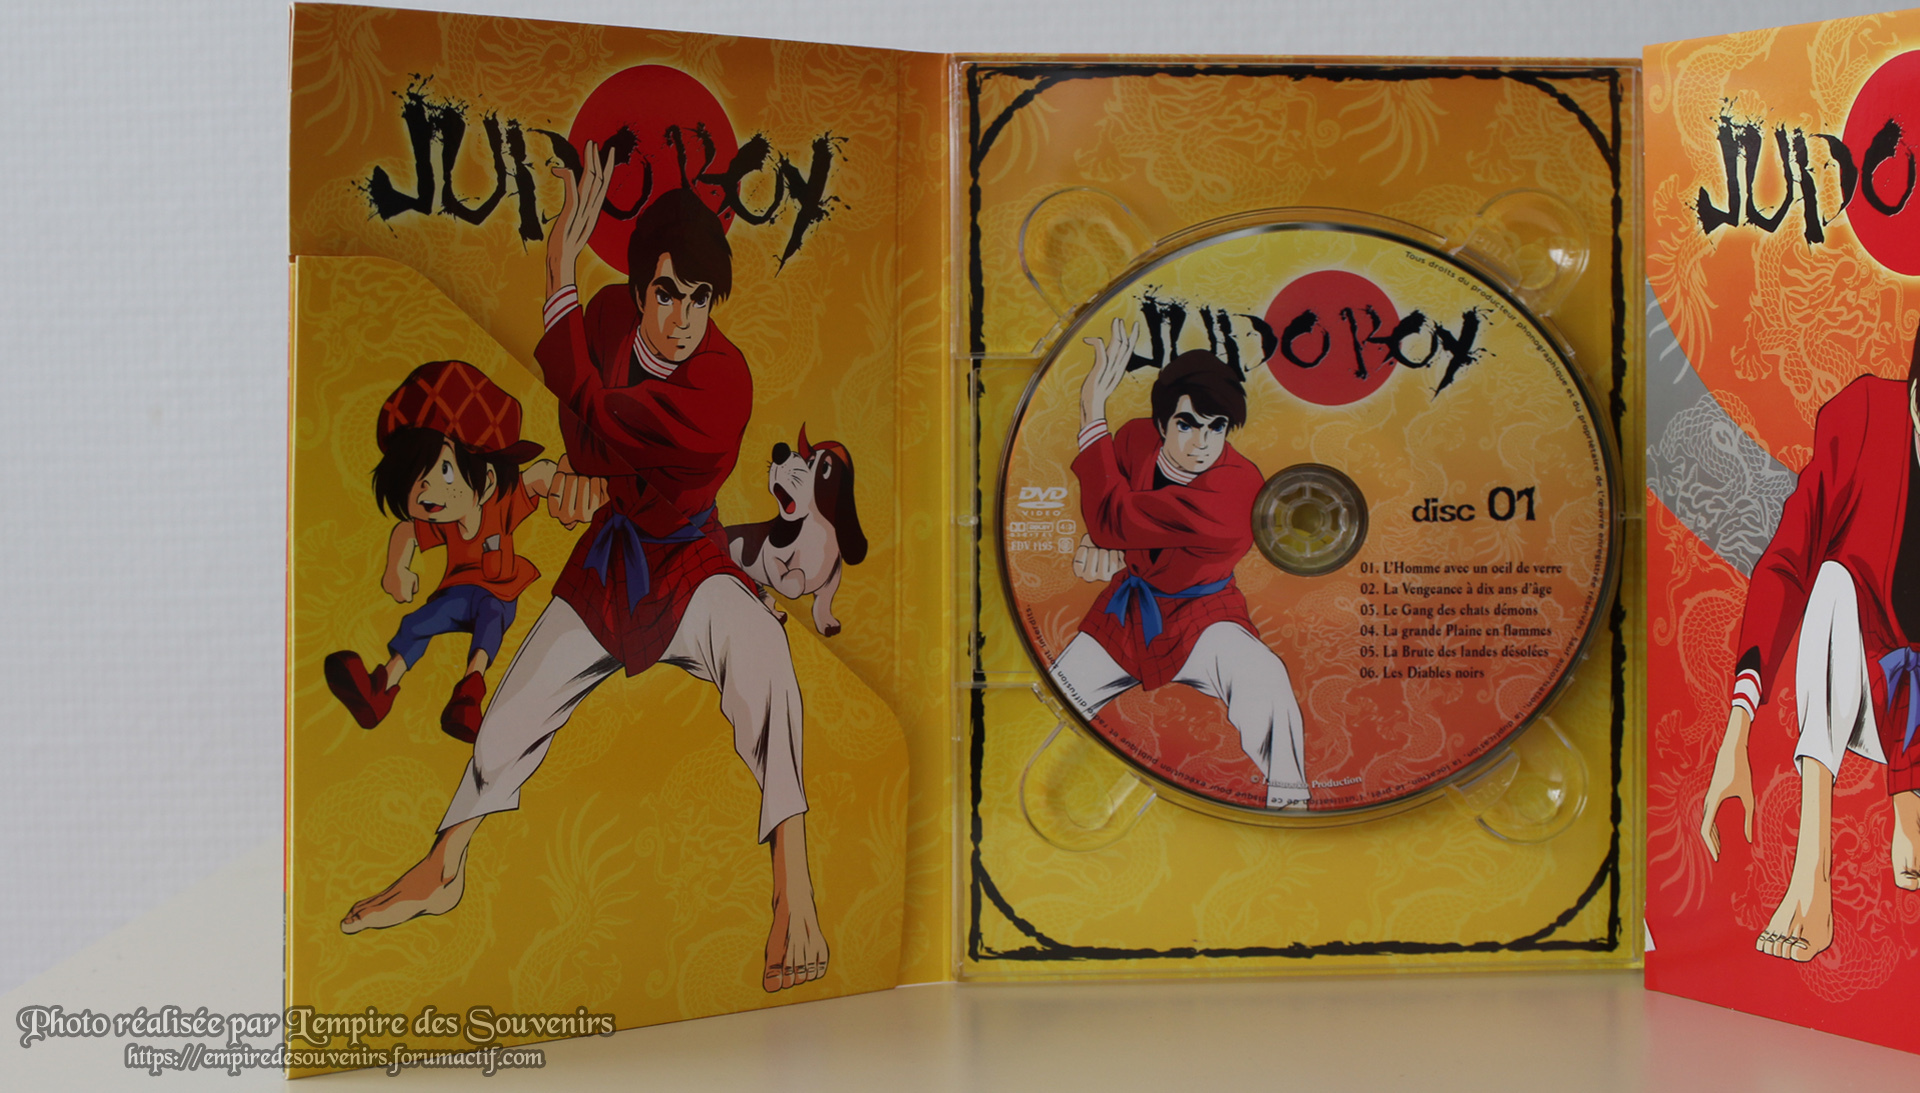 Judo Boy, test DVD U55p